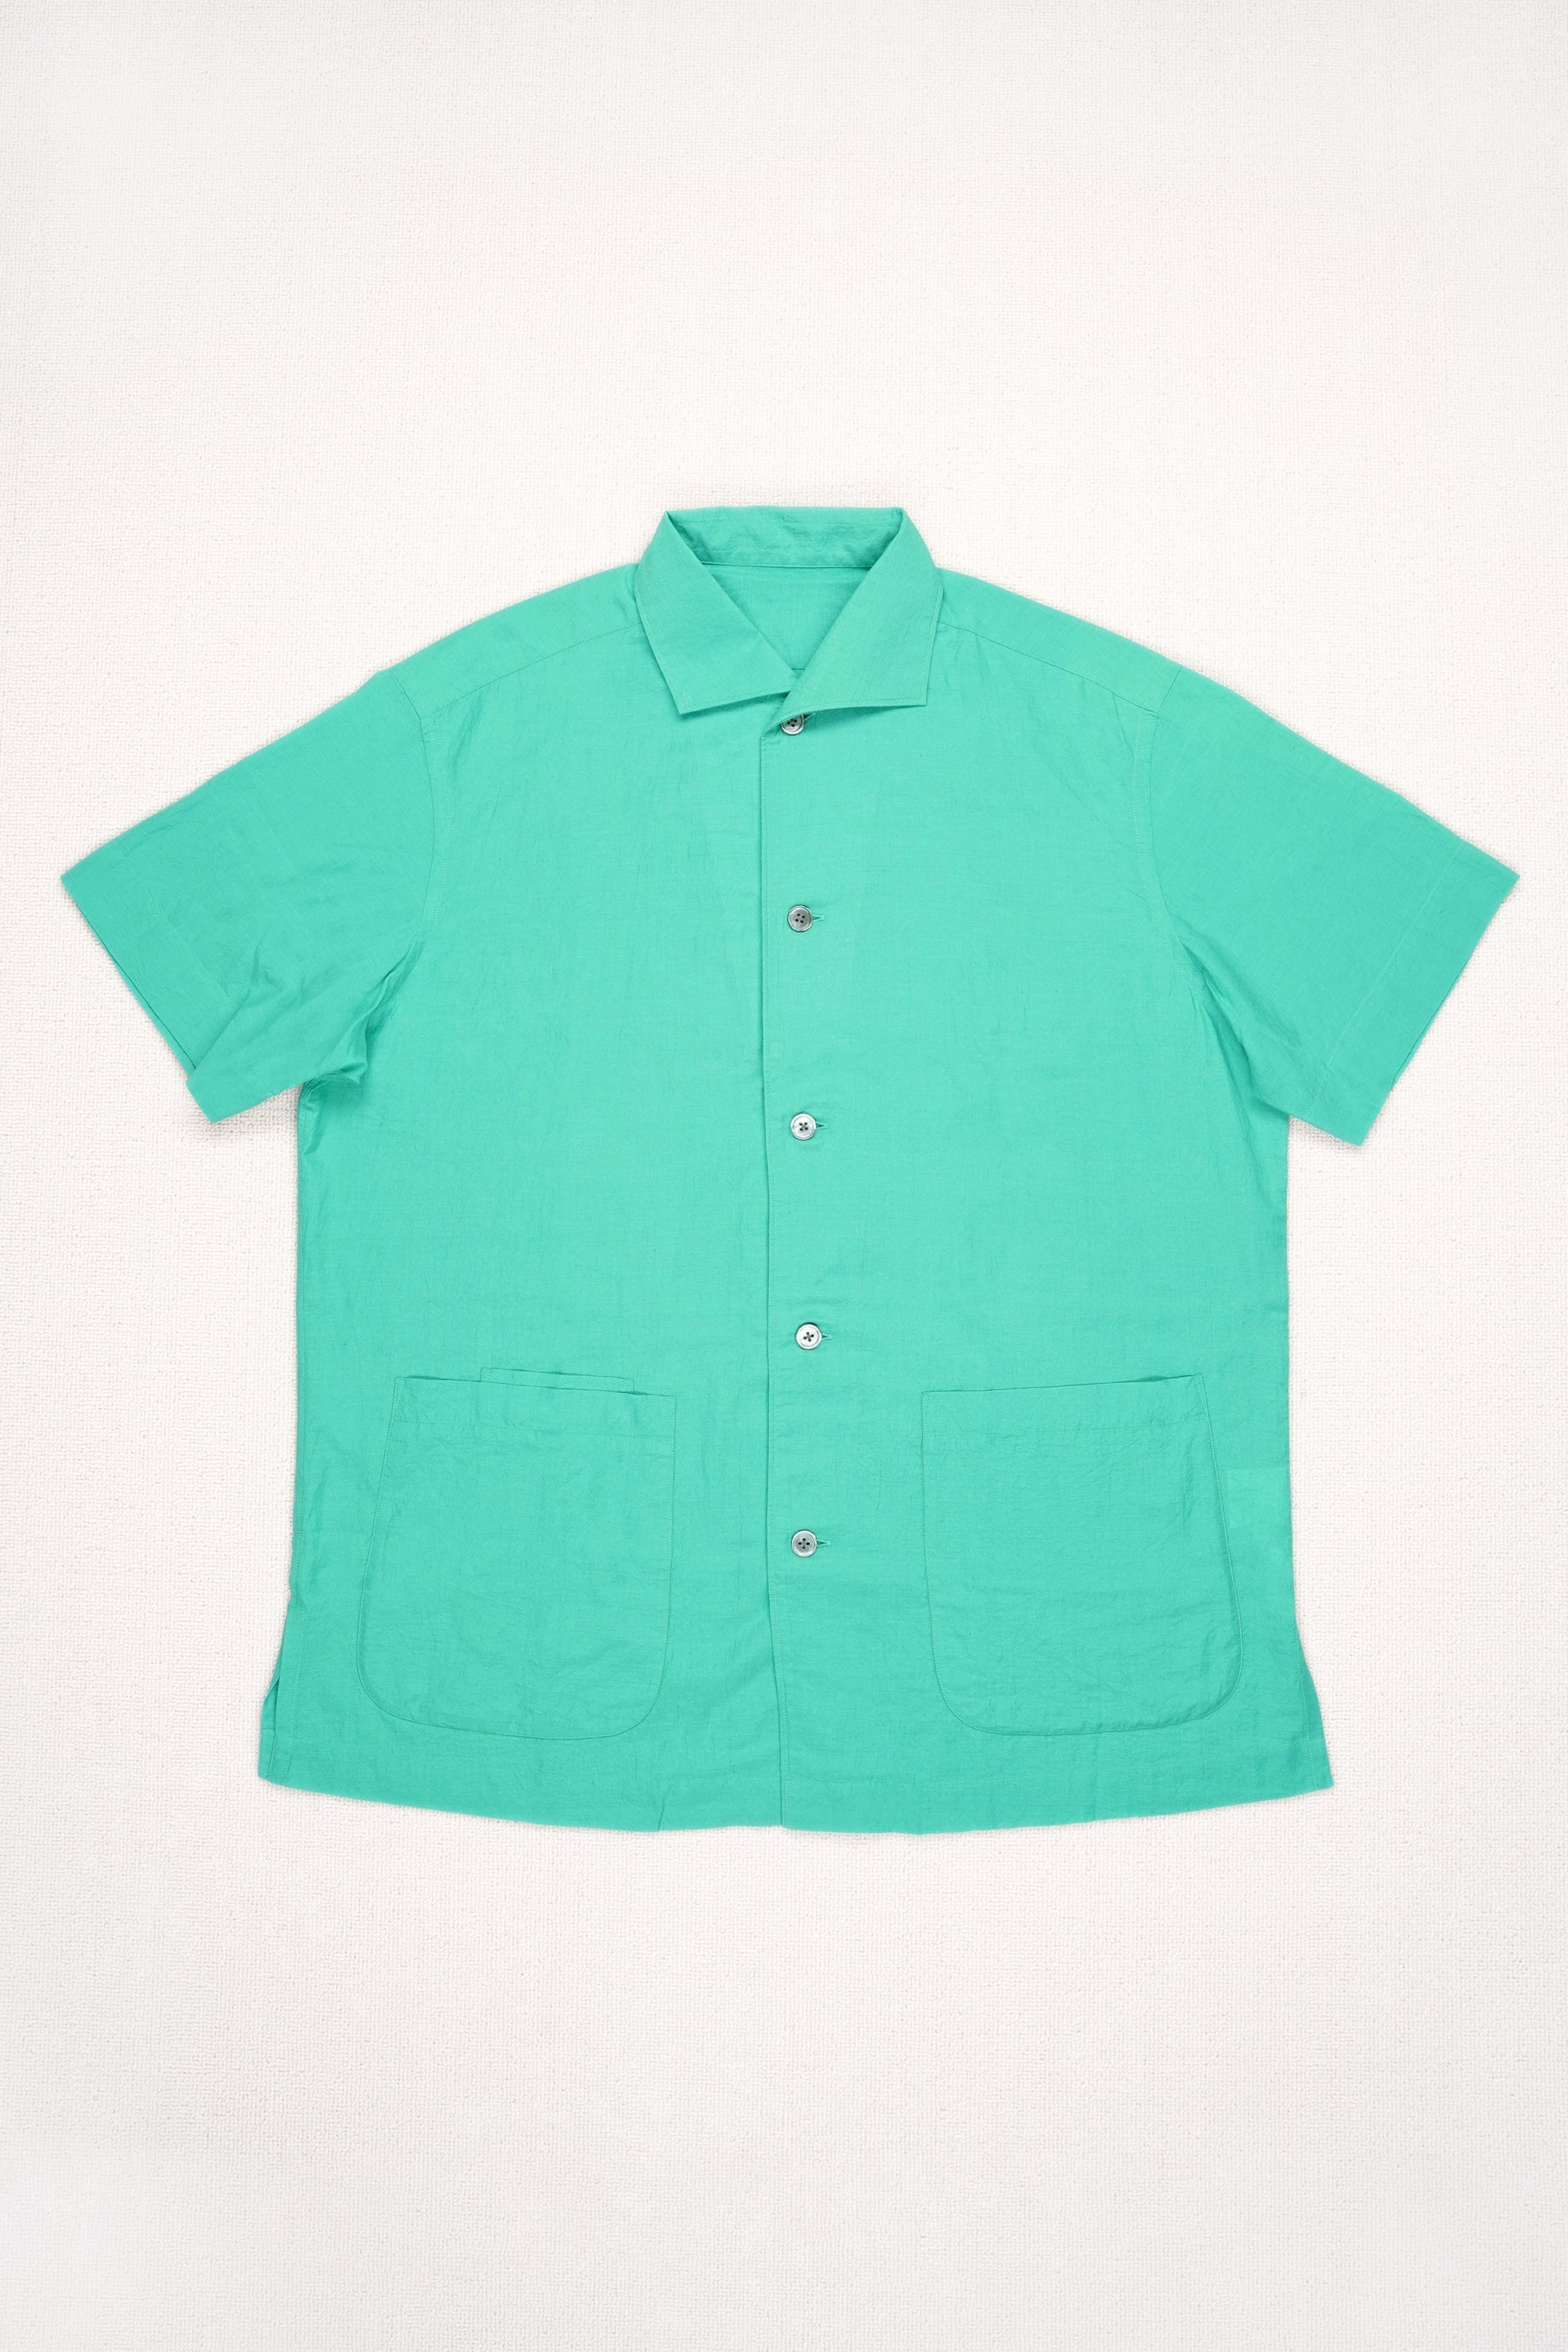 The Armoury Green Cotton/Silk Handloom Camp Collar Short Sleeve Shirt *sample*